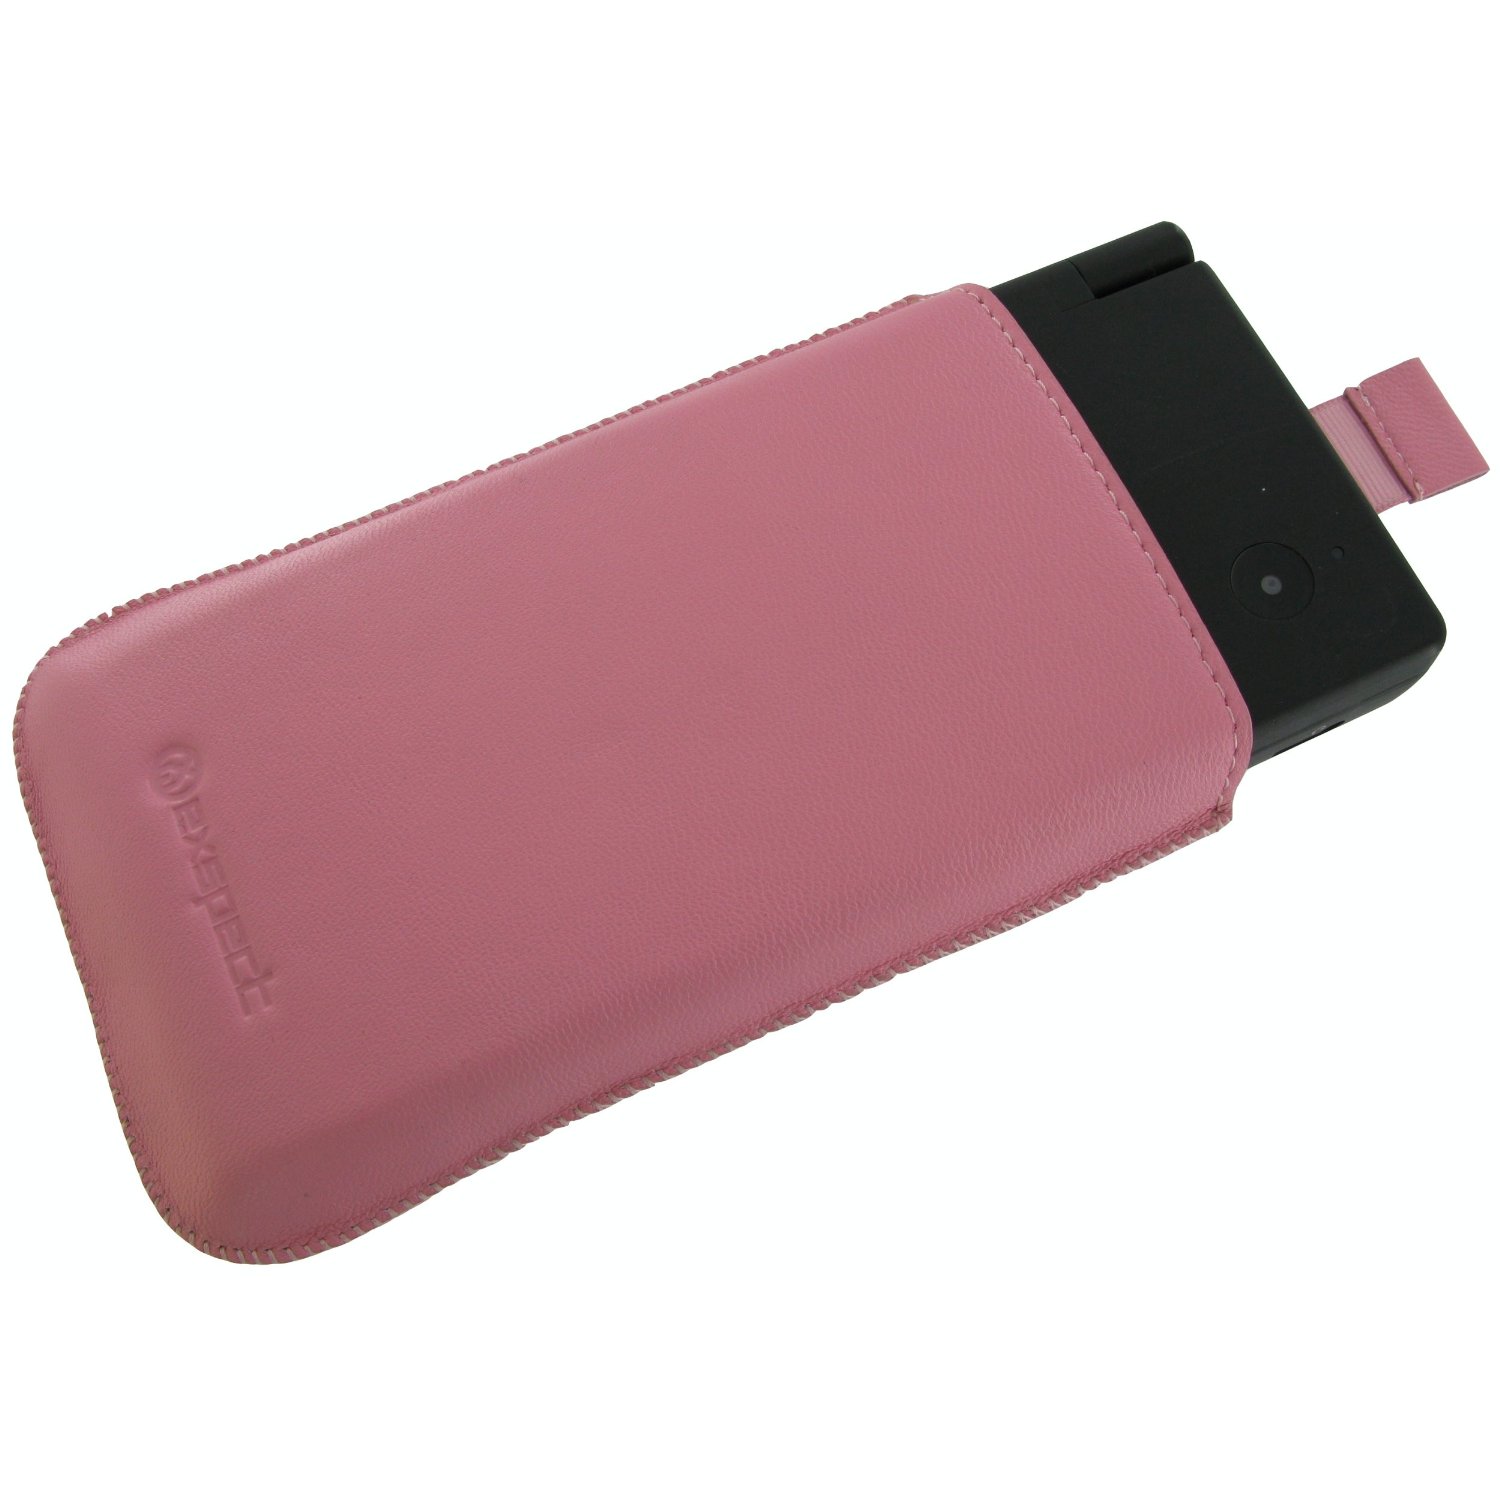 NDSi Luxury Leather Slip Case Pink